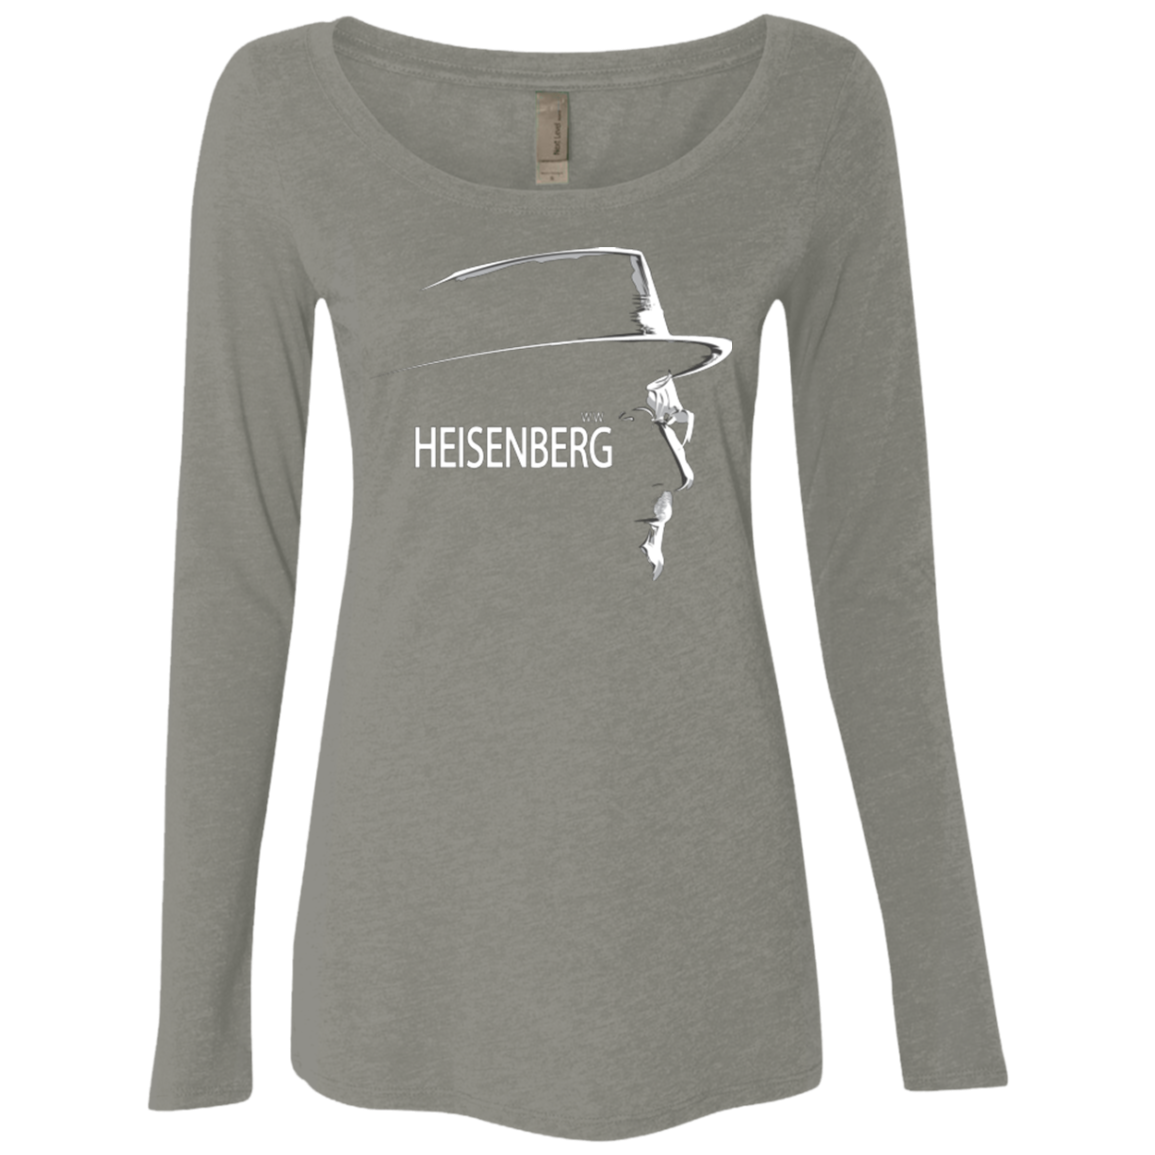 HEISENBERG Women's Triblend Long Sleeve Shirt